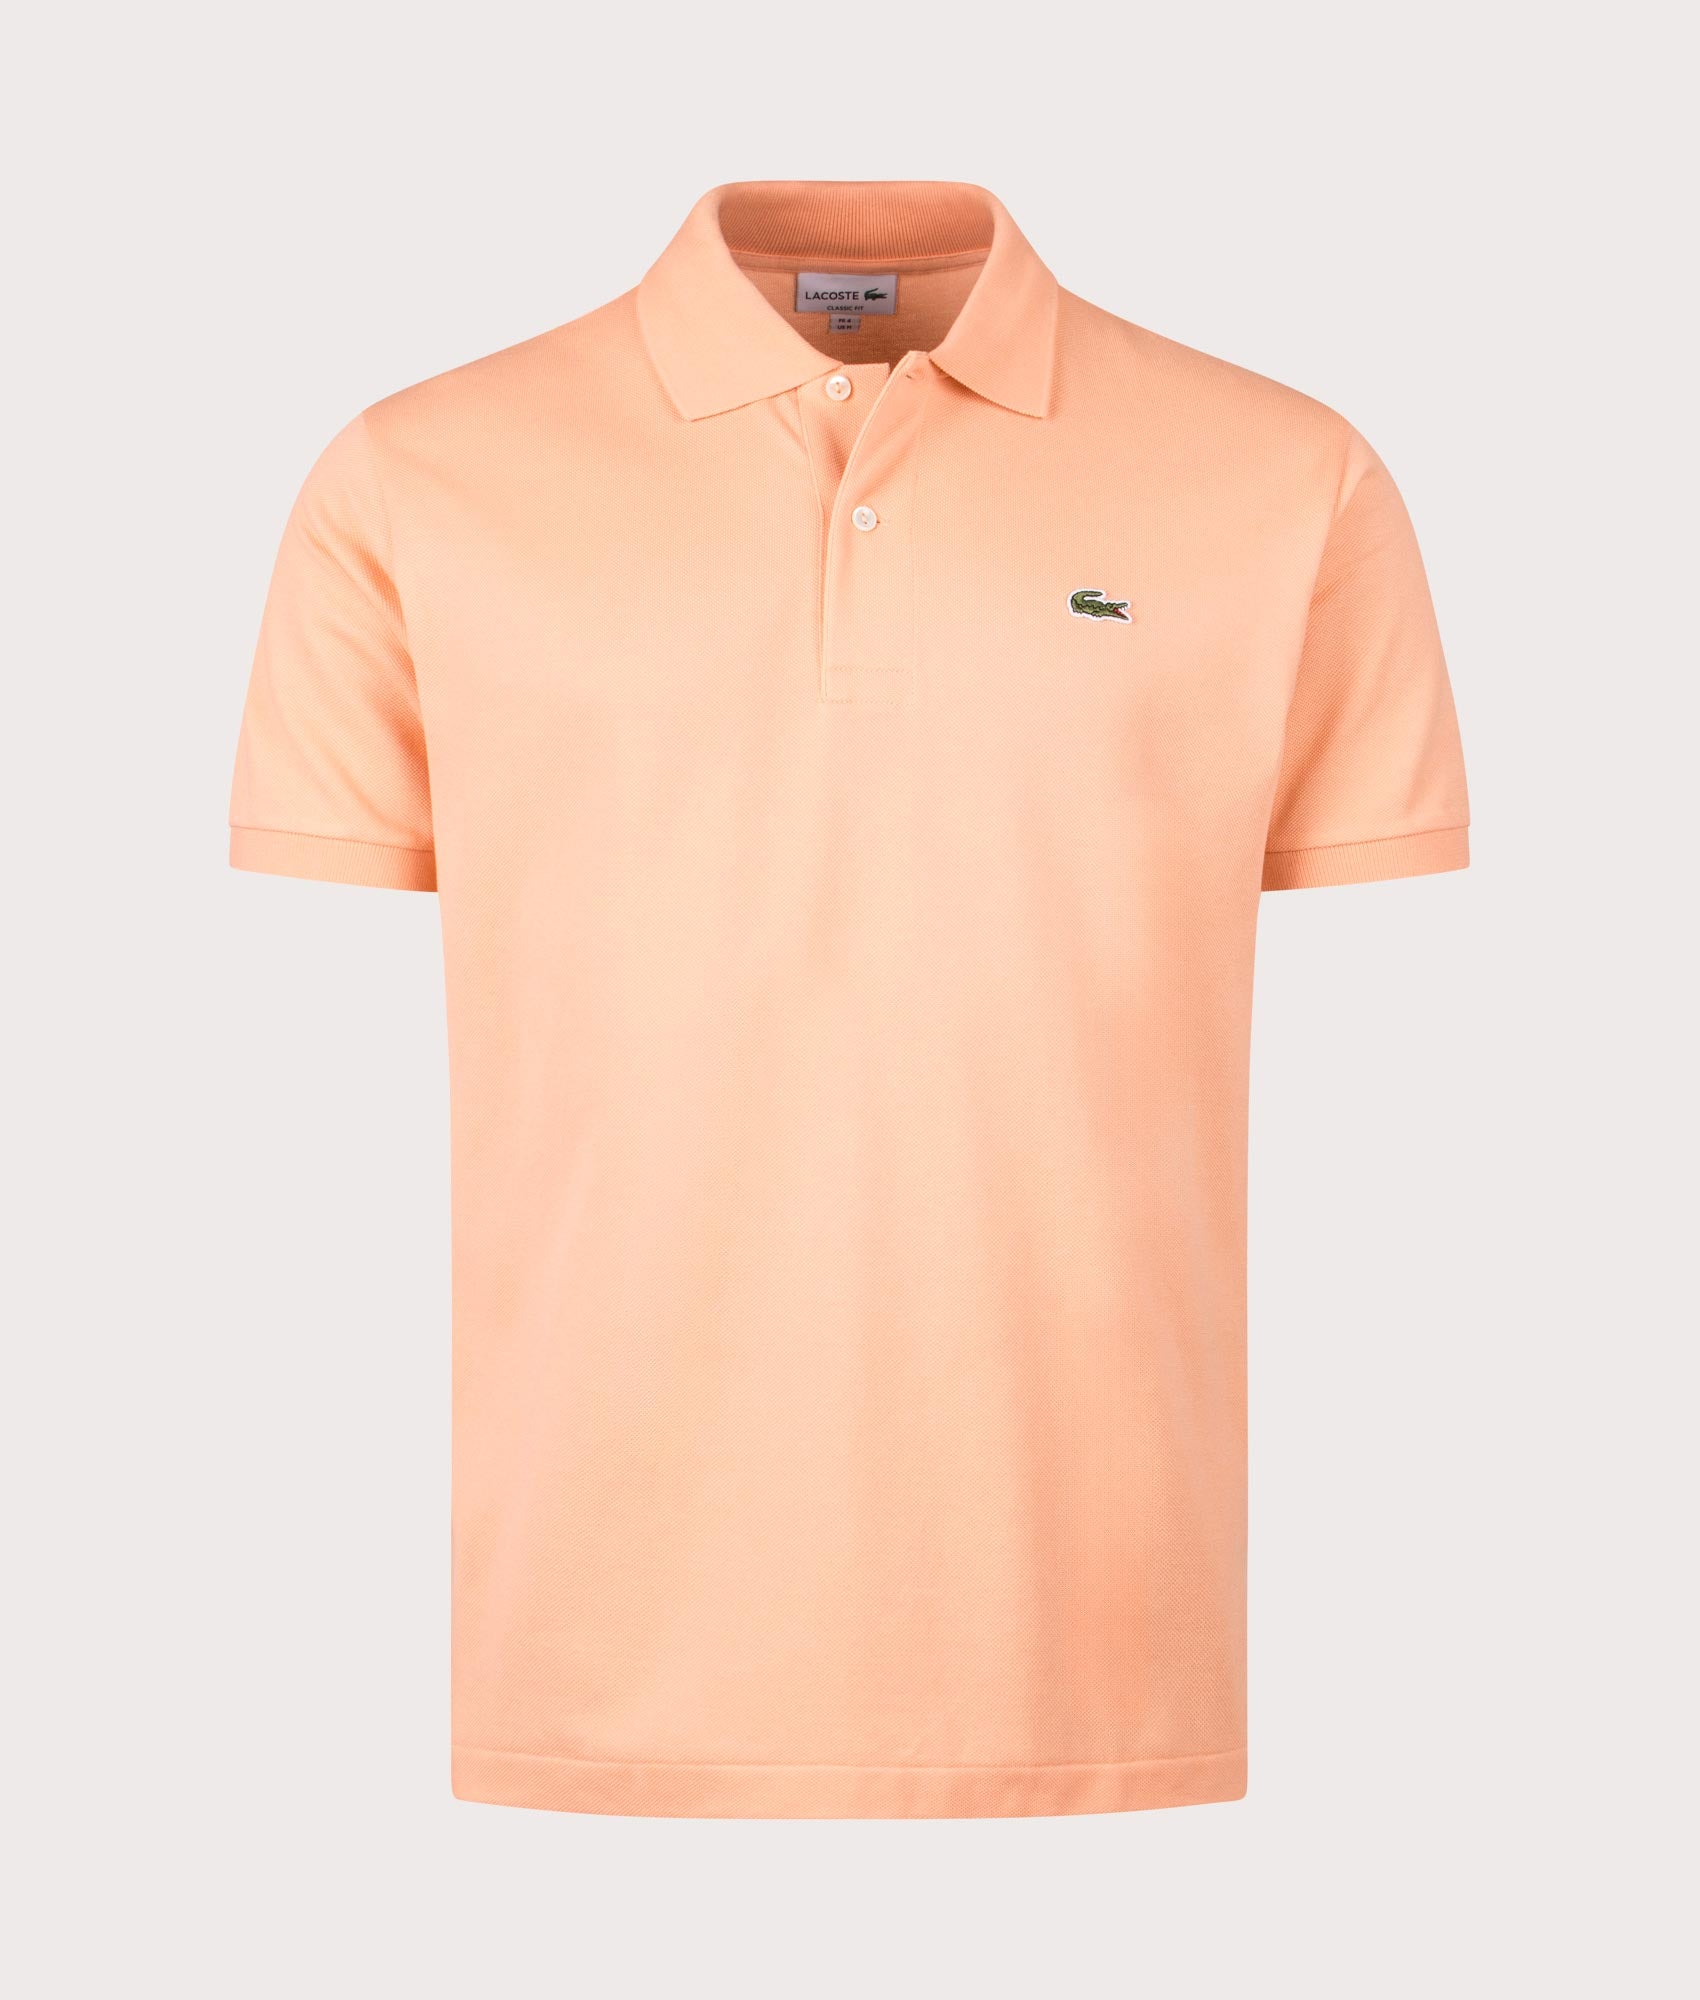 Lacoste Mens Relaxed Fit L1212 Croc Logo Polo Shirt - Colour: IXY Light Orange - Size: 6/XL